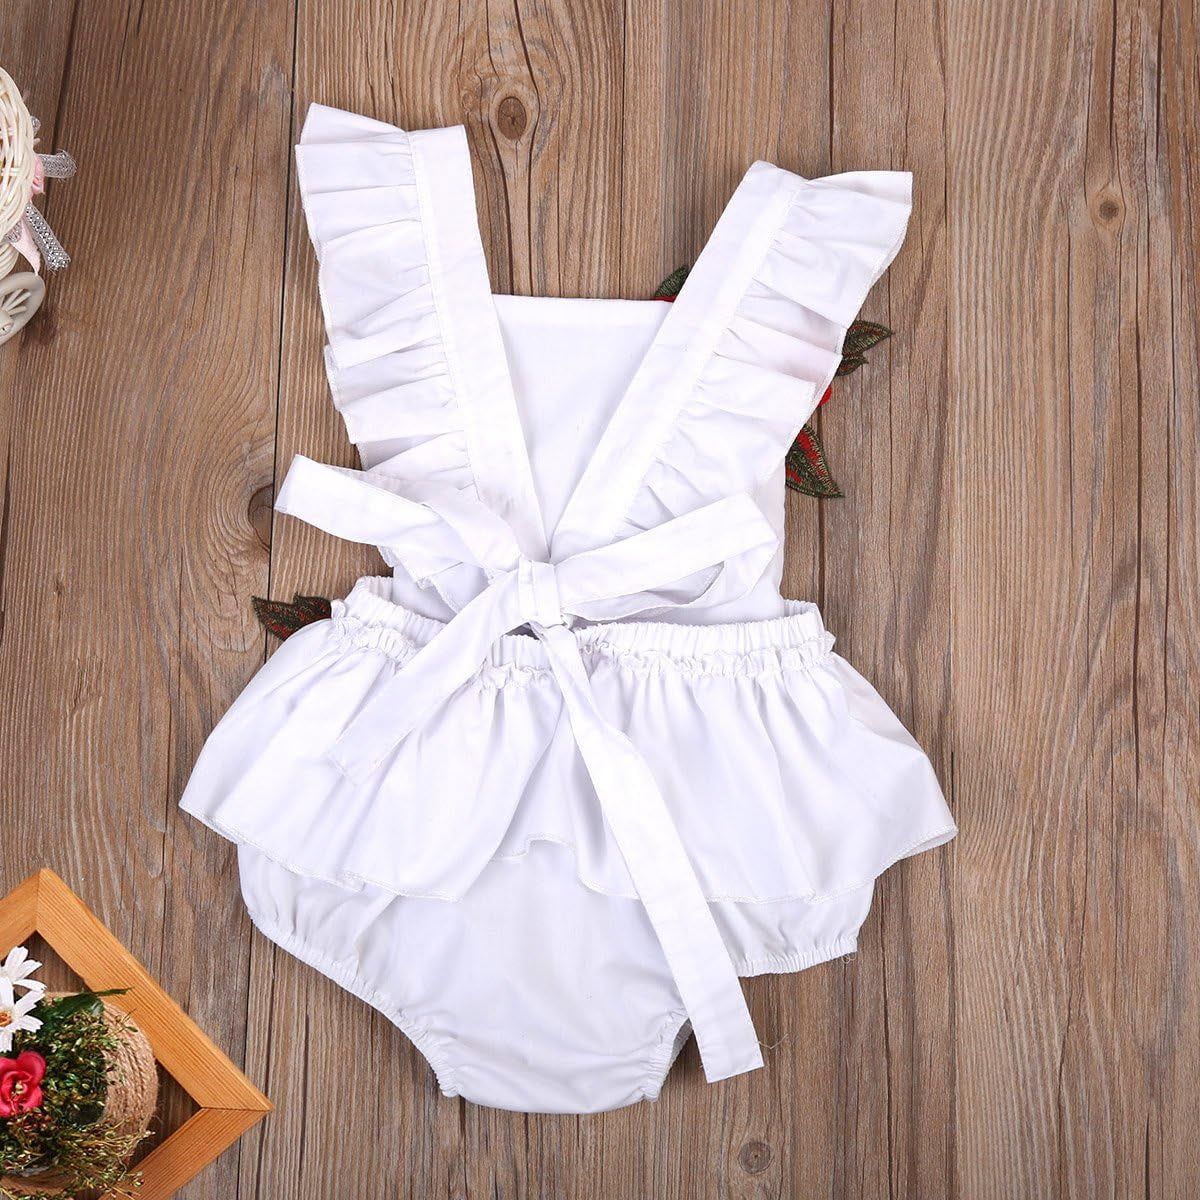 Baby Girl's Jumpsuit Newborn Infant Kids Floral Summer Romper Bodysuit Sundress Outfits (6-12)